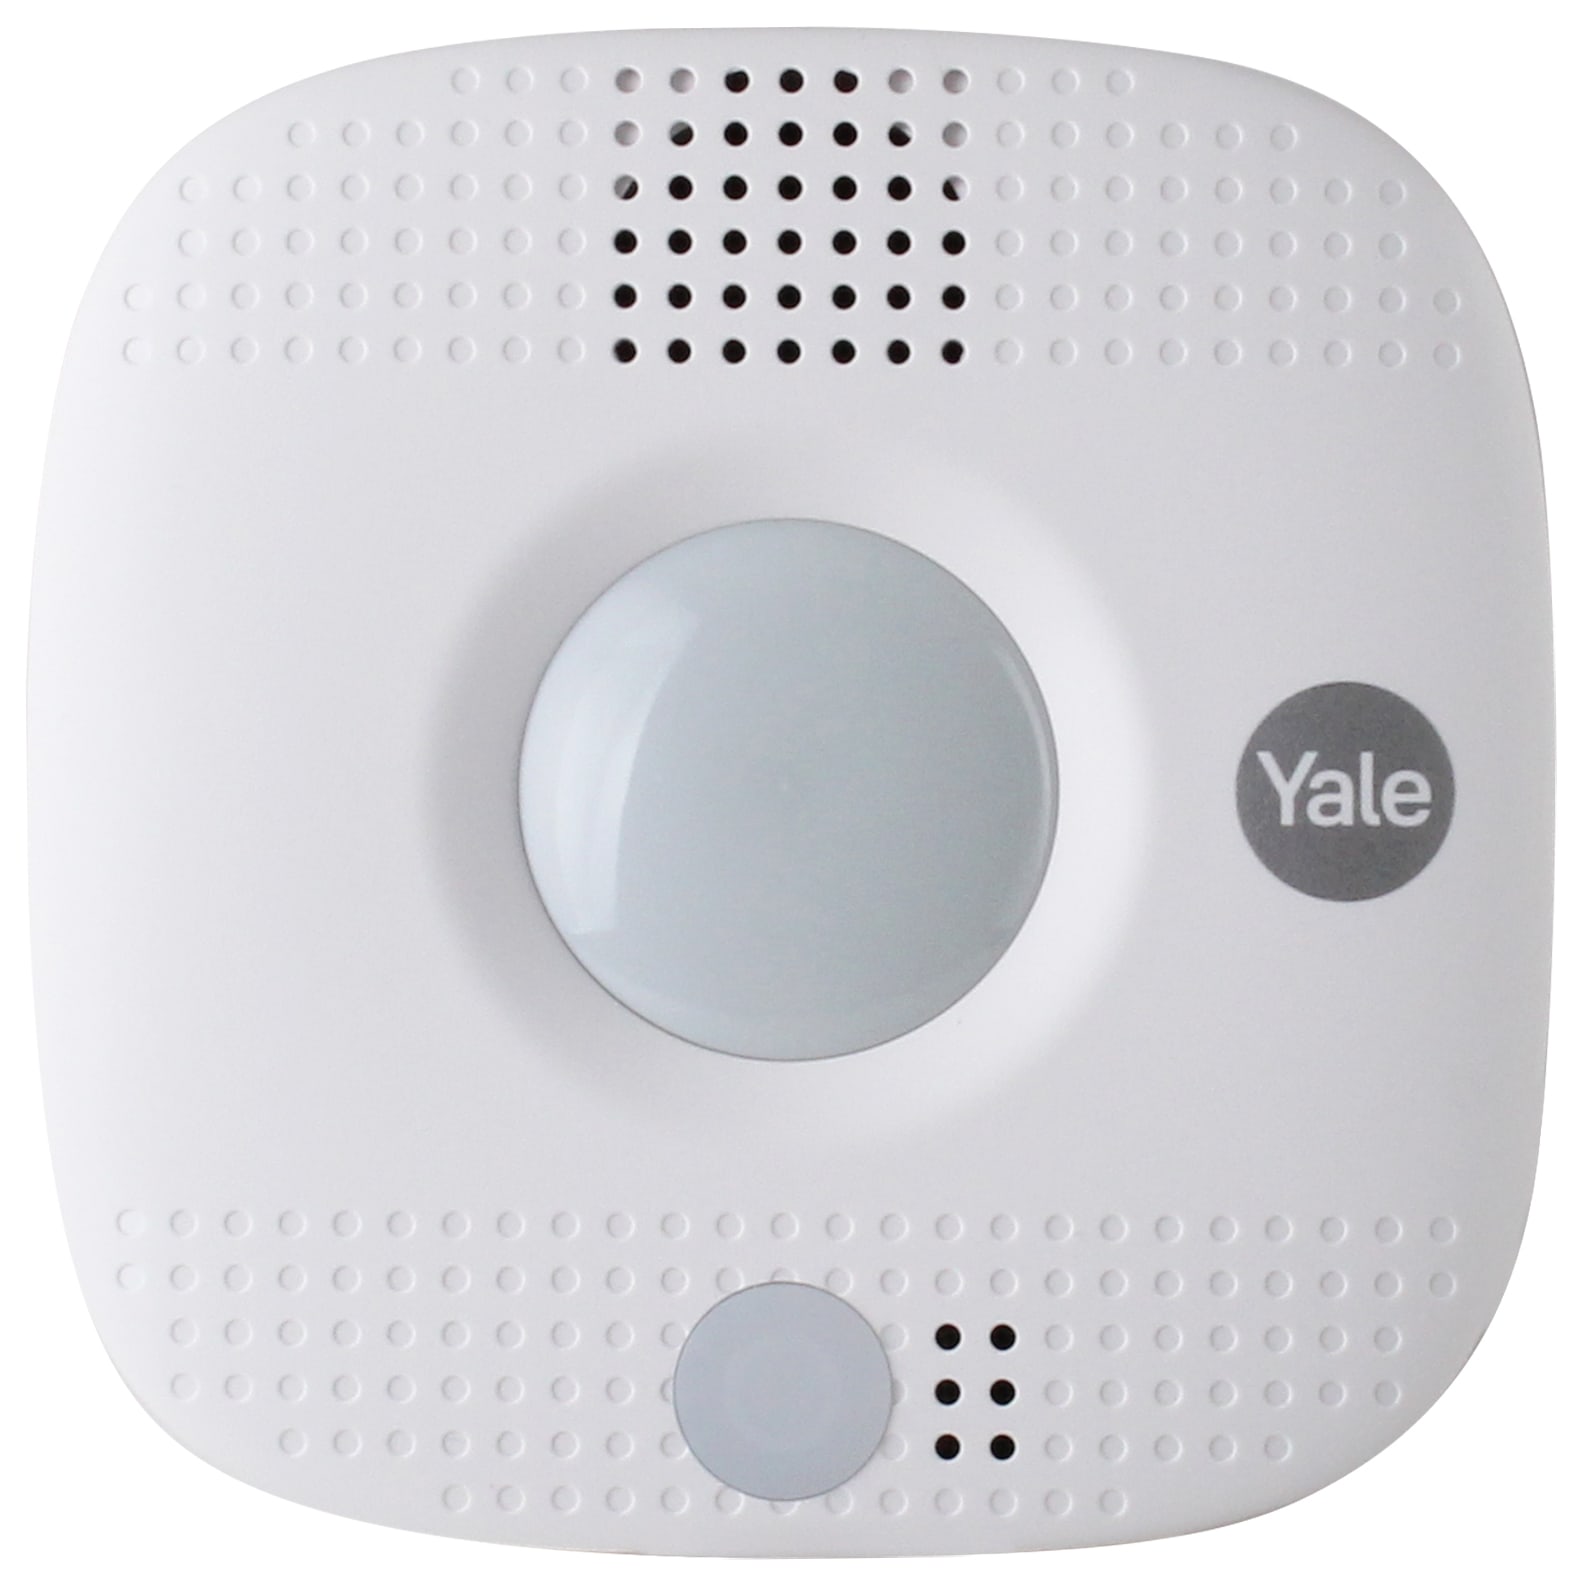 Yale Sync Smoke Detector